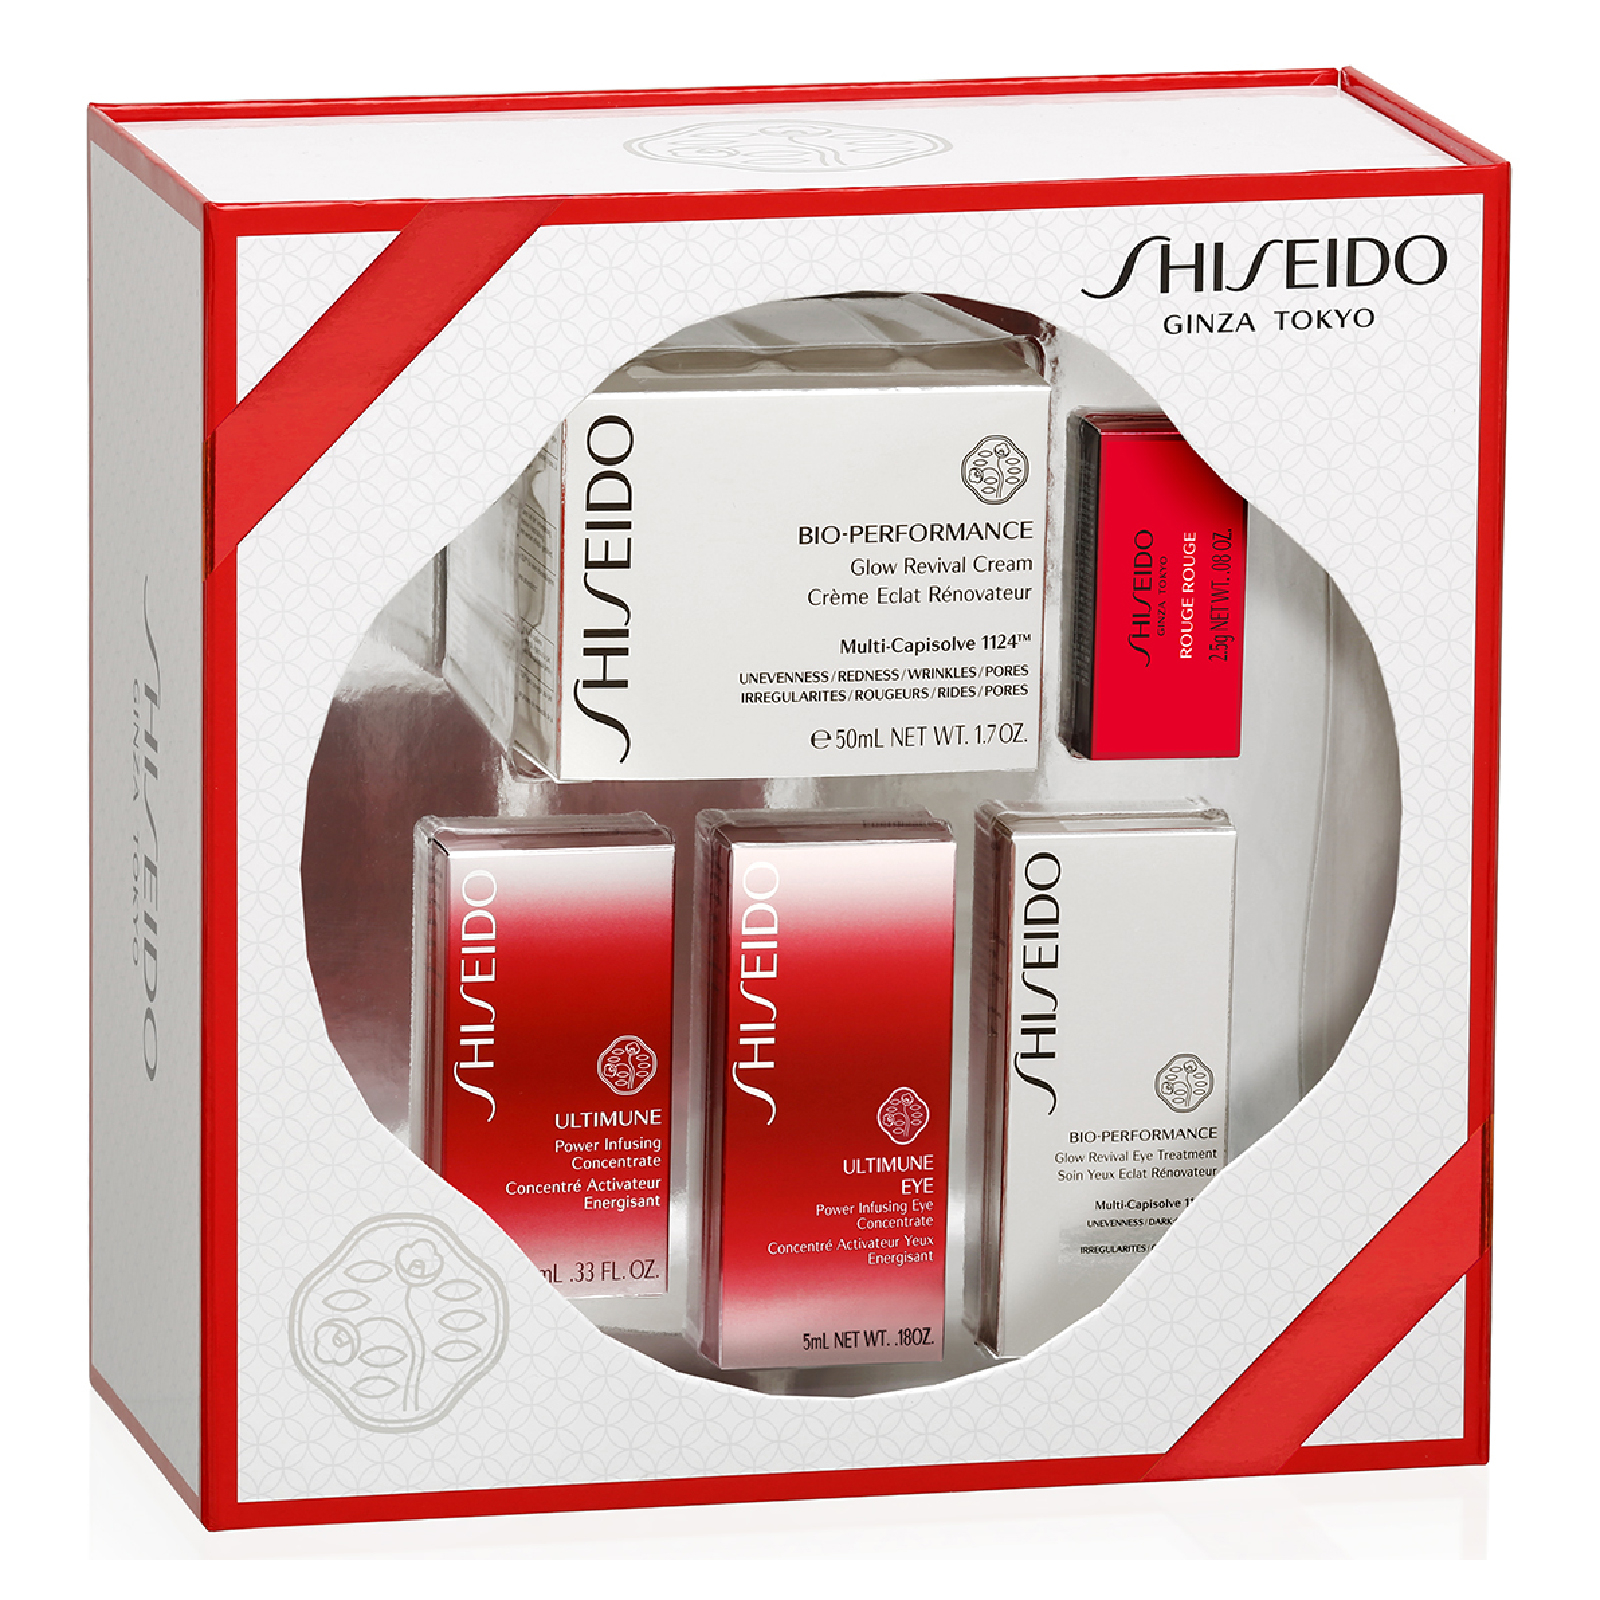 Shiseido Bio-Performance Glow Revival Cream Kit